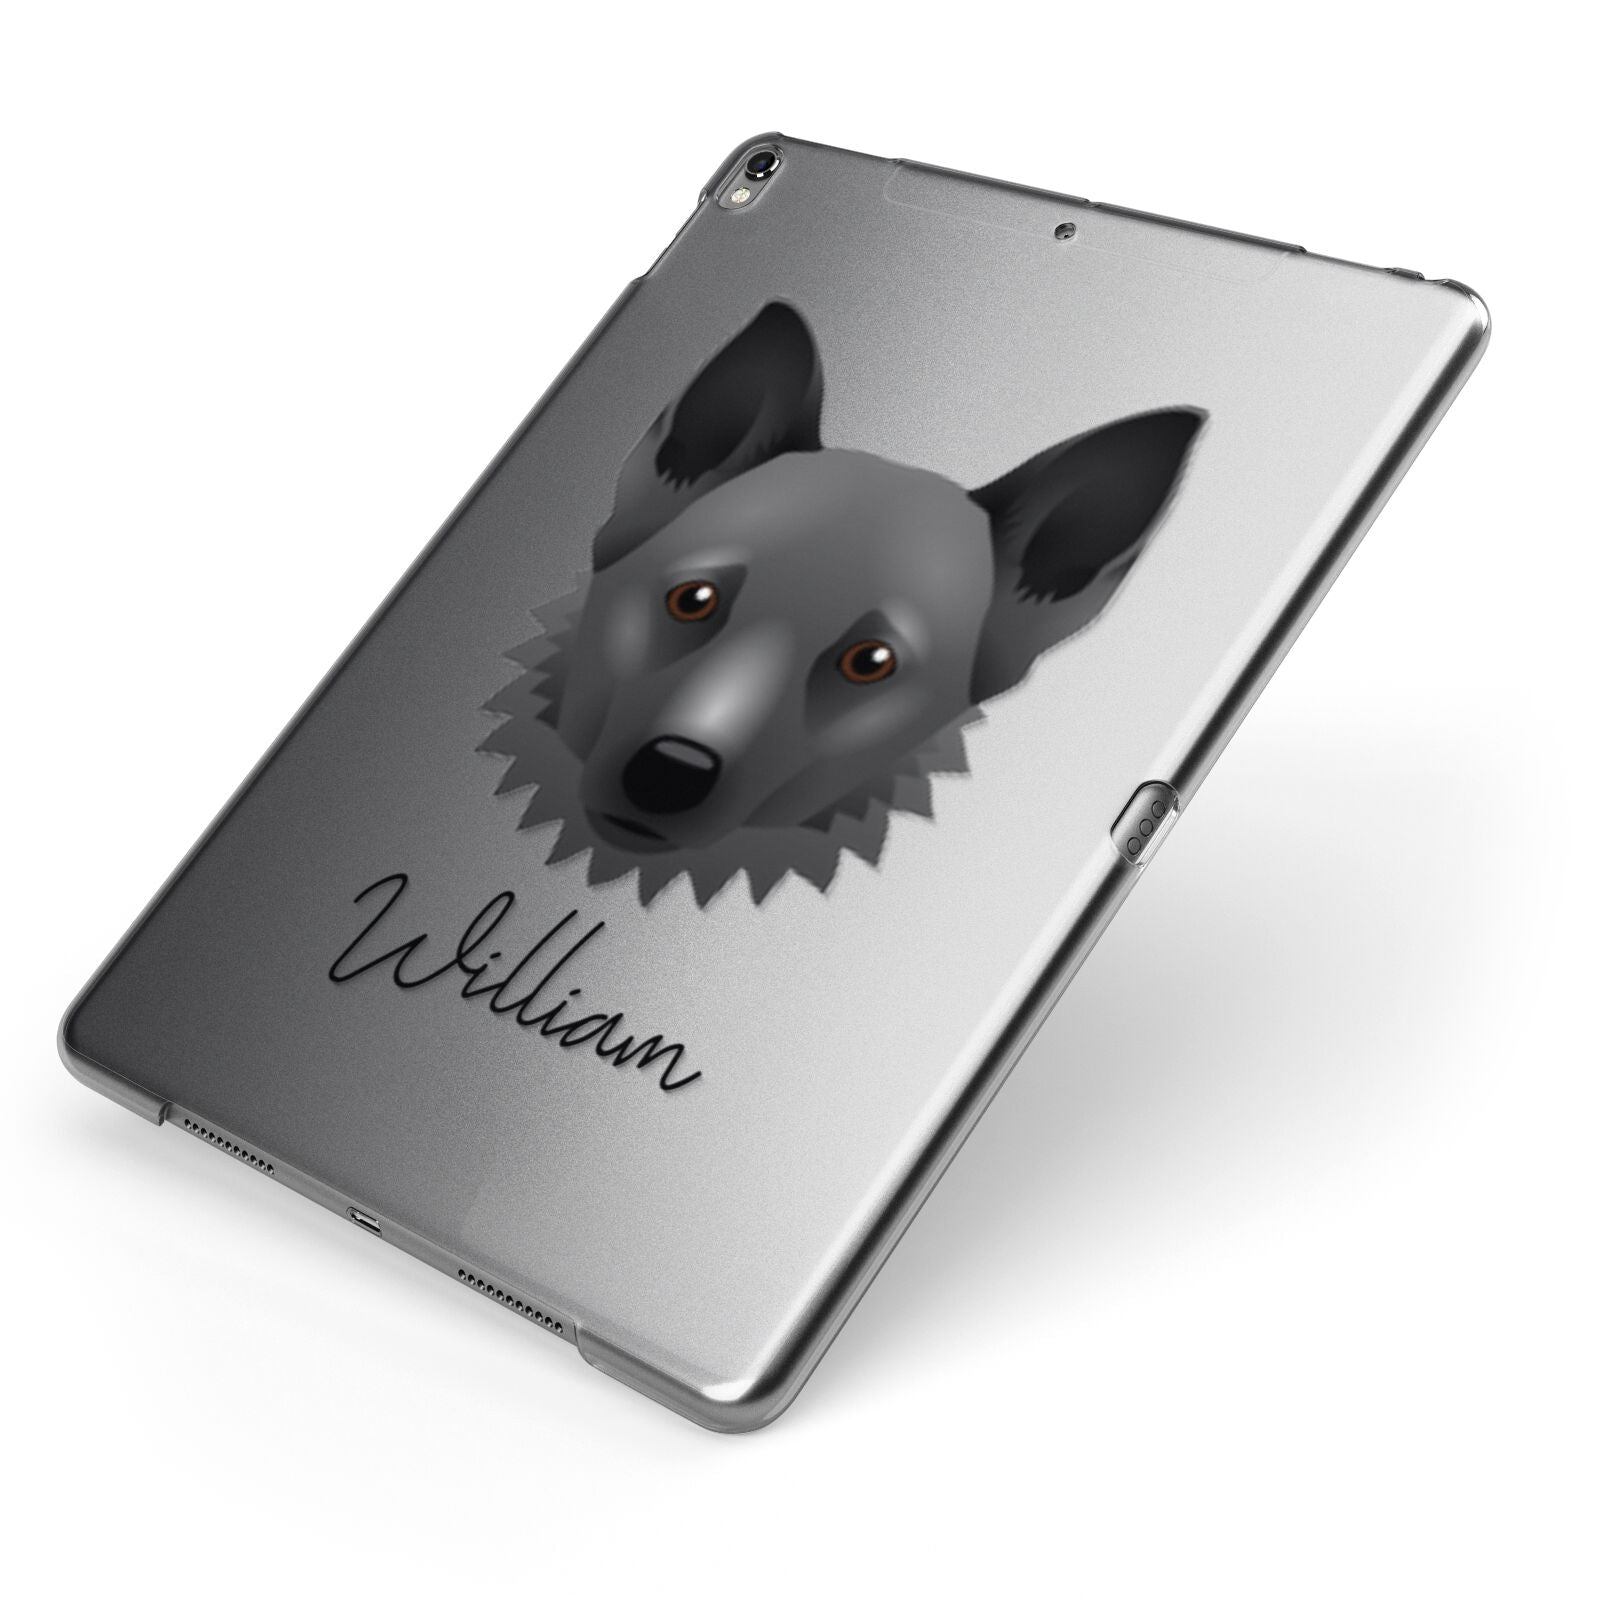 Canaan Dog Personalised Apple iPad Case on Grey iPad Side View